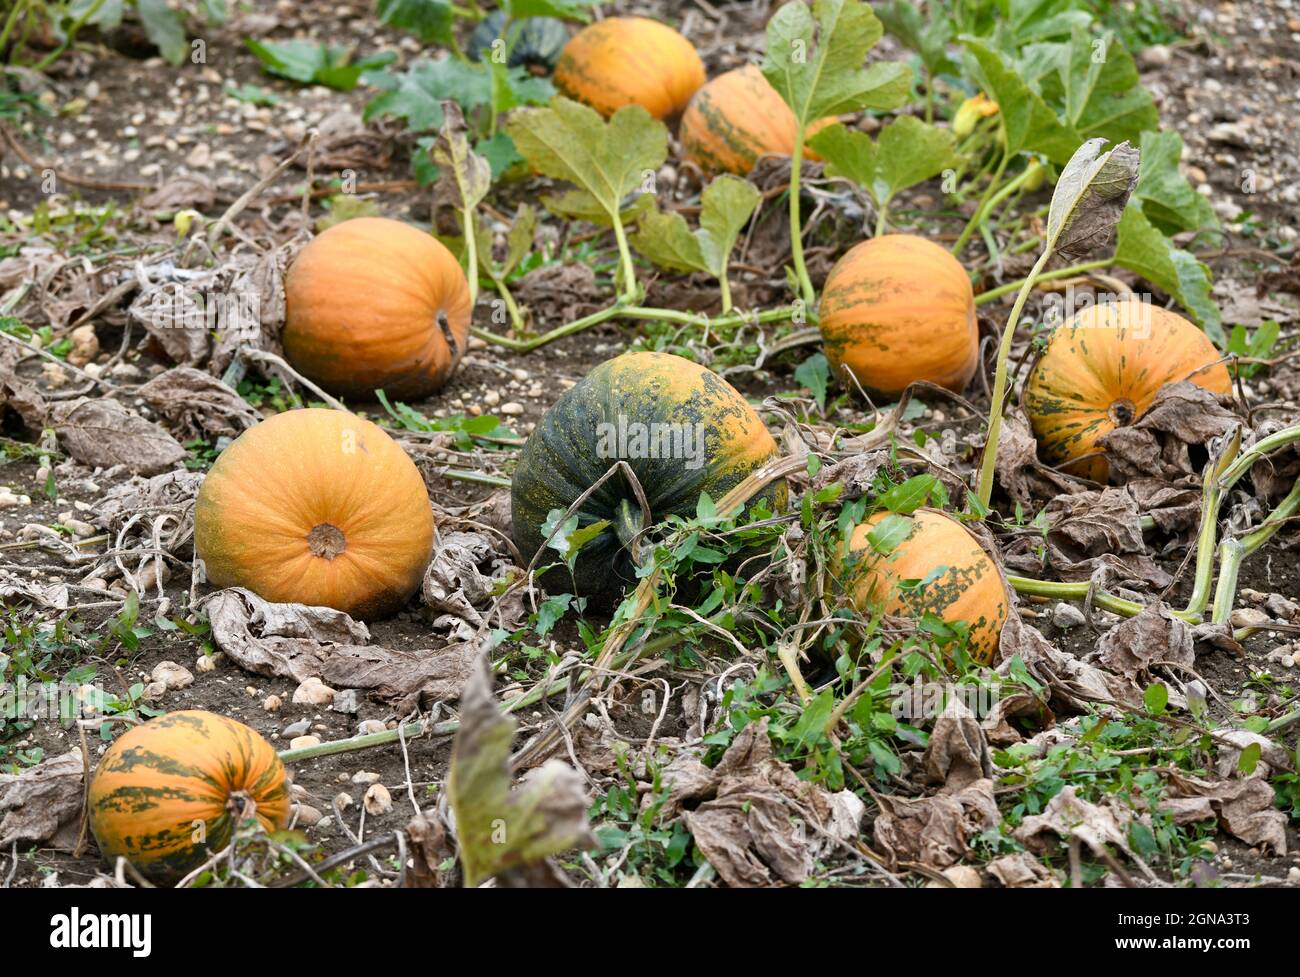 Grosser gelb-grüner im Feld liegende Speisekürbisse - Muskatkürbis - cucurbita - pumpkin Stock Photo